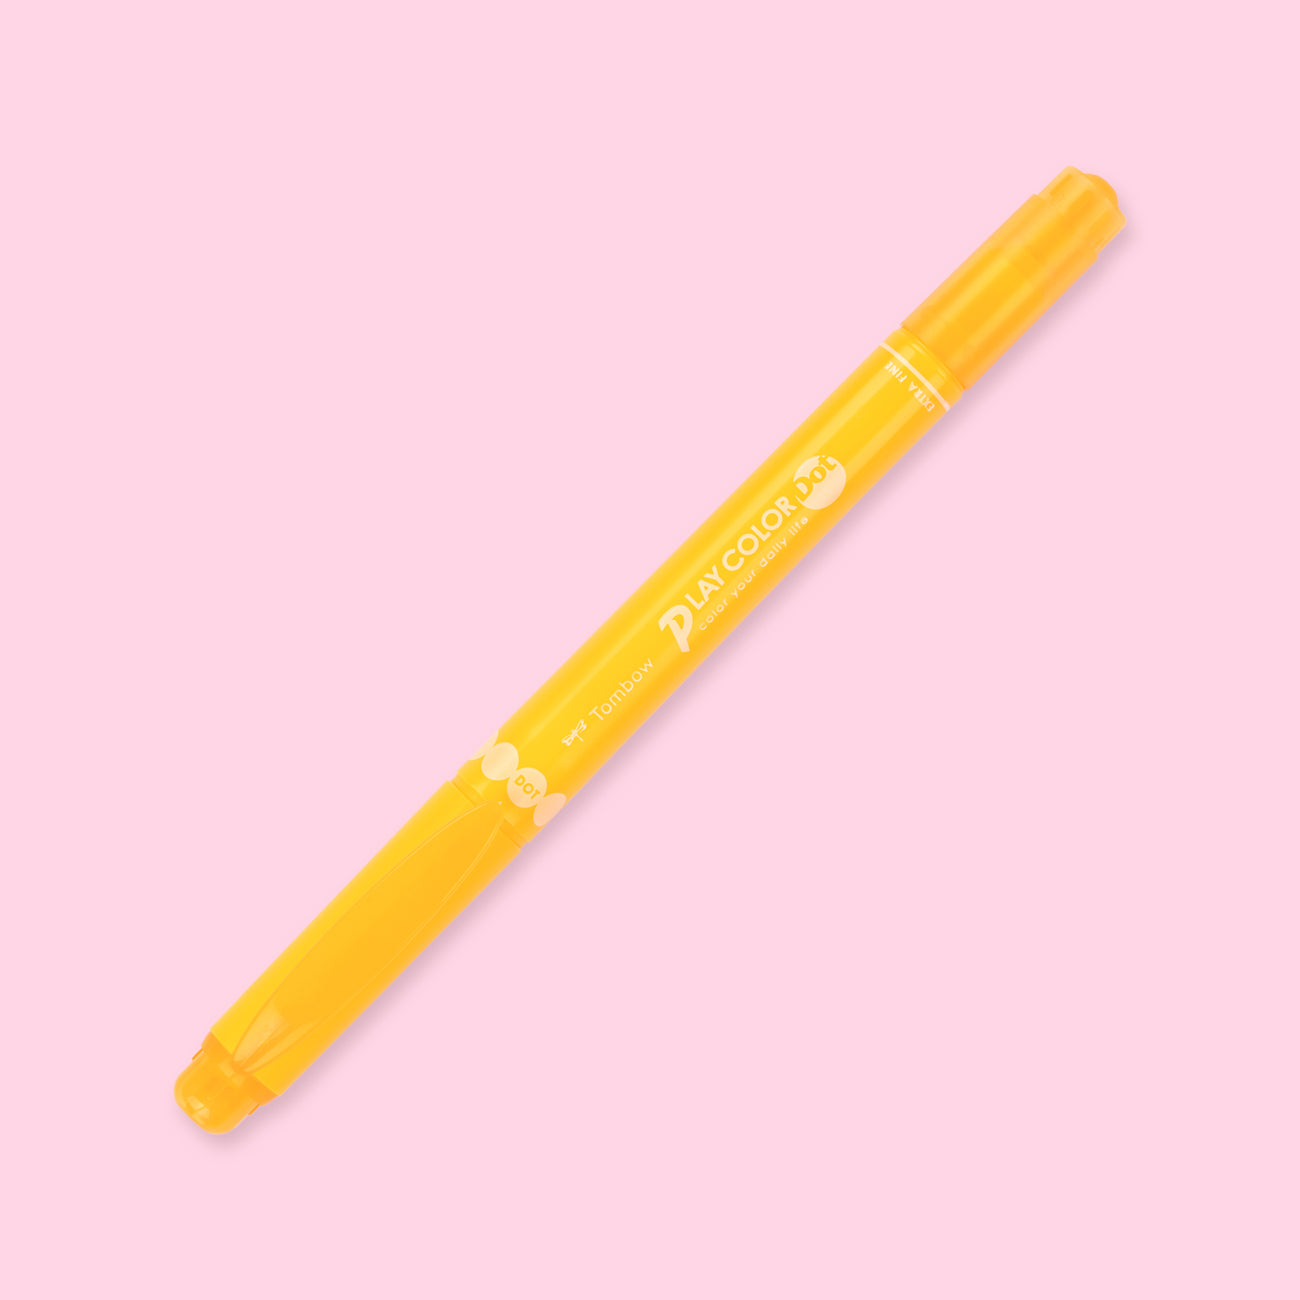 Sharpie Ultra Fine Pen - Yellow